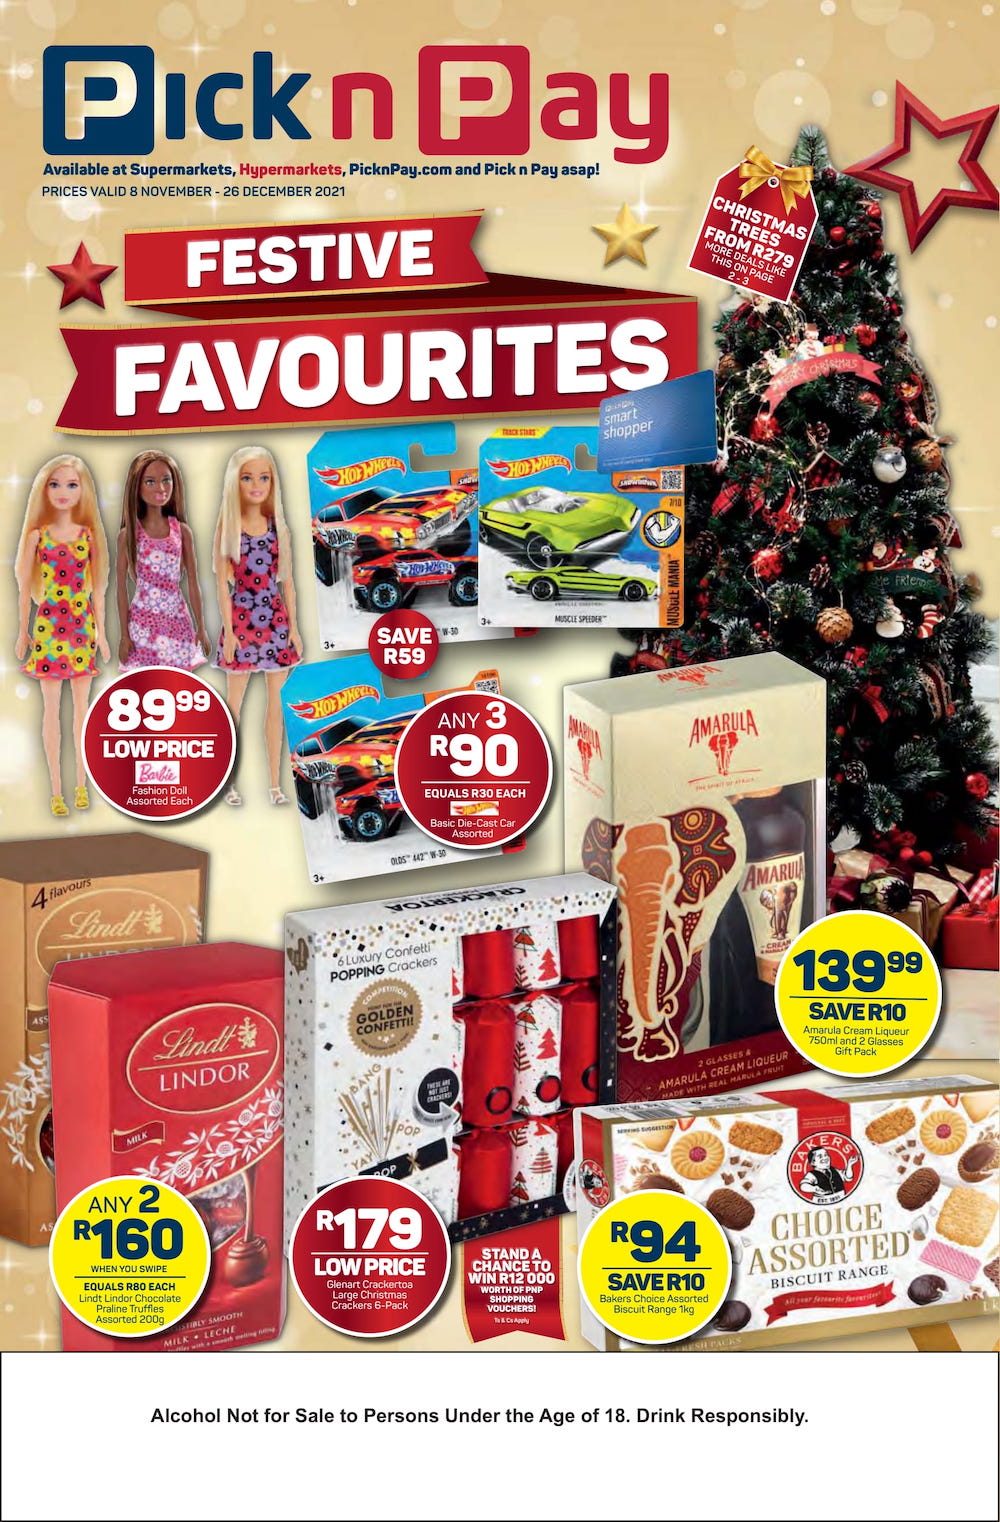 Pnp Specials Christmas 8 Nov 2021 Pick n Pay Catalogue Pnp Sale